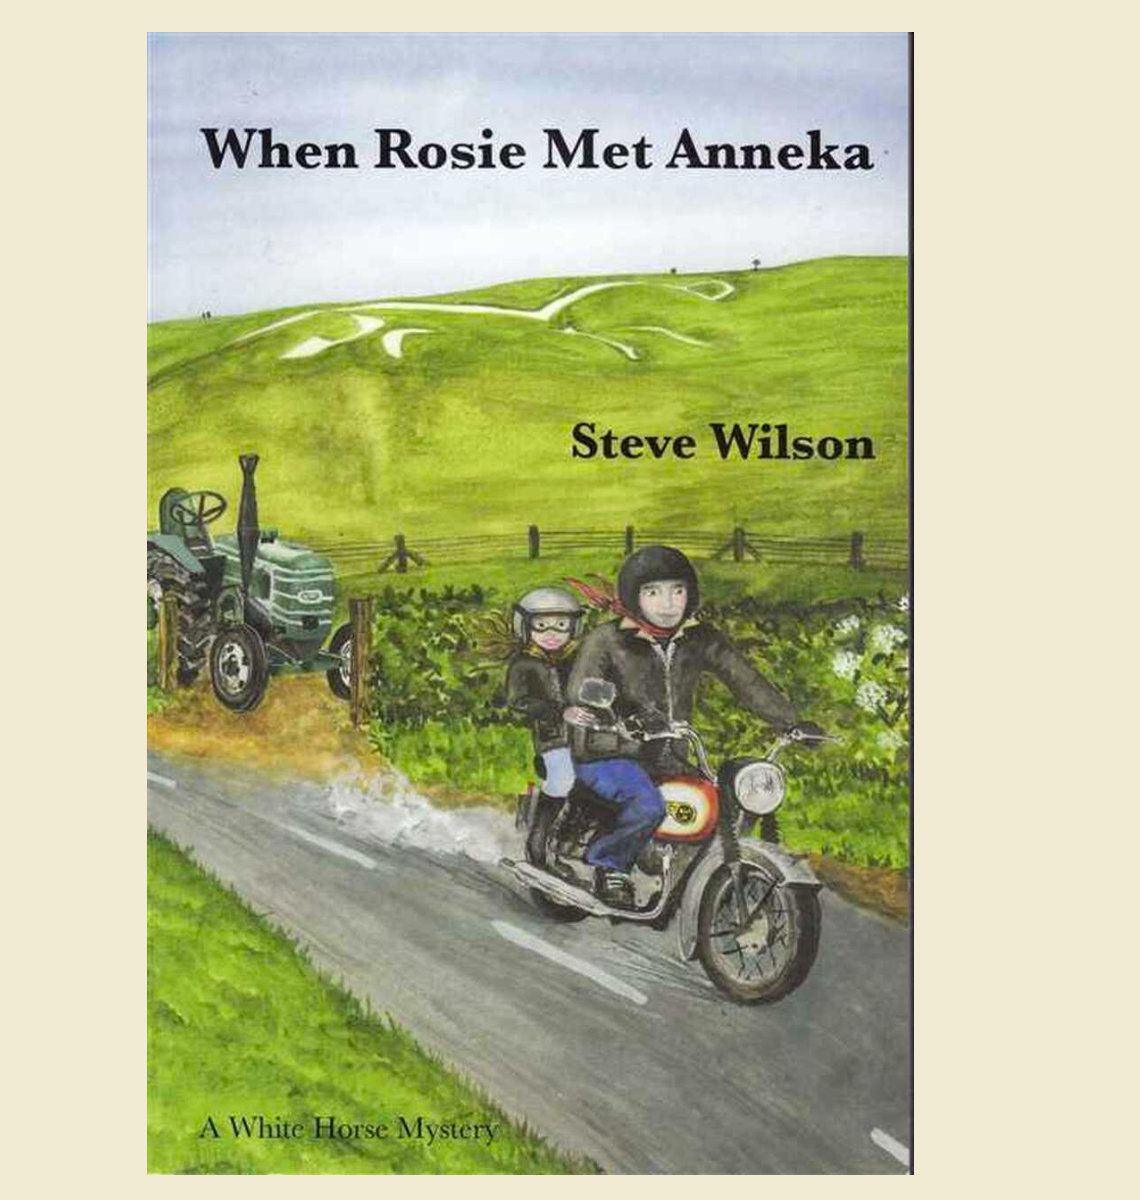 WHEN ROSIE MET ANNEKA, a white horse mystery by Steve Wilson